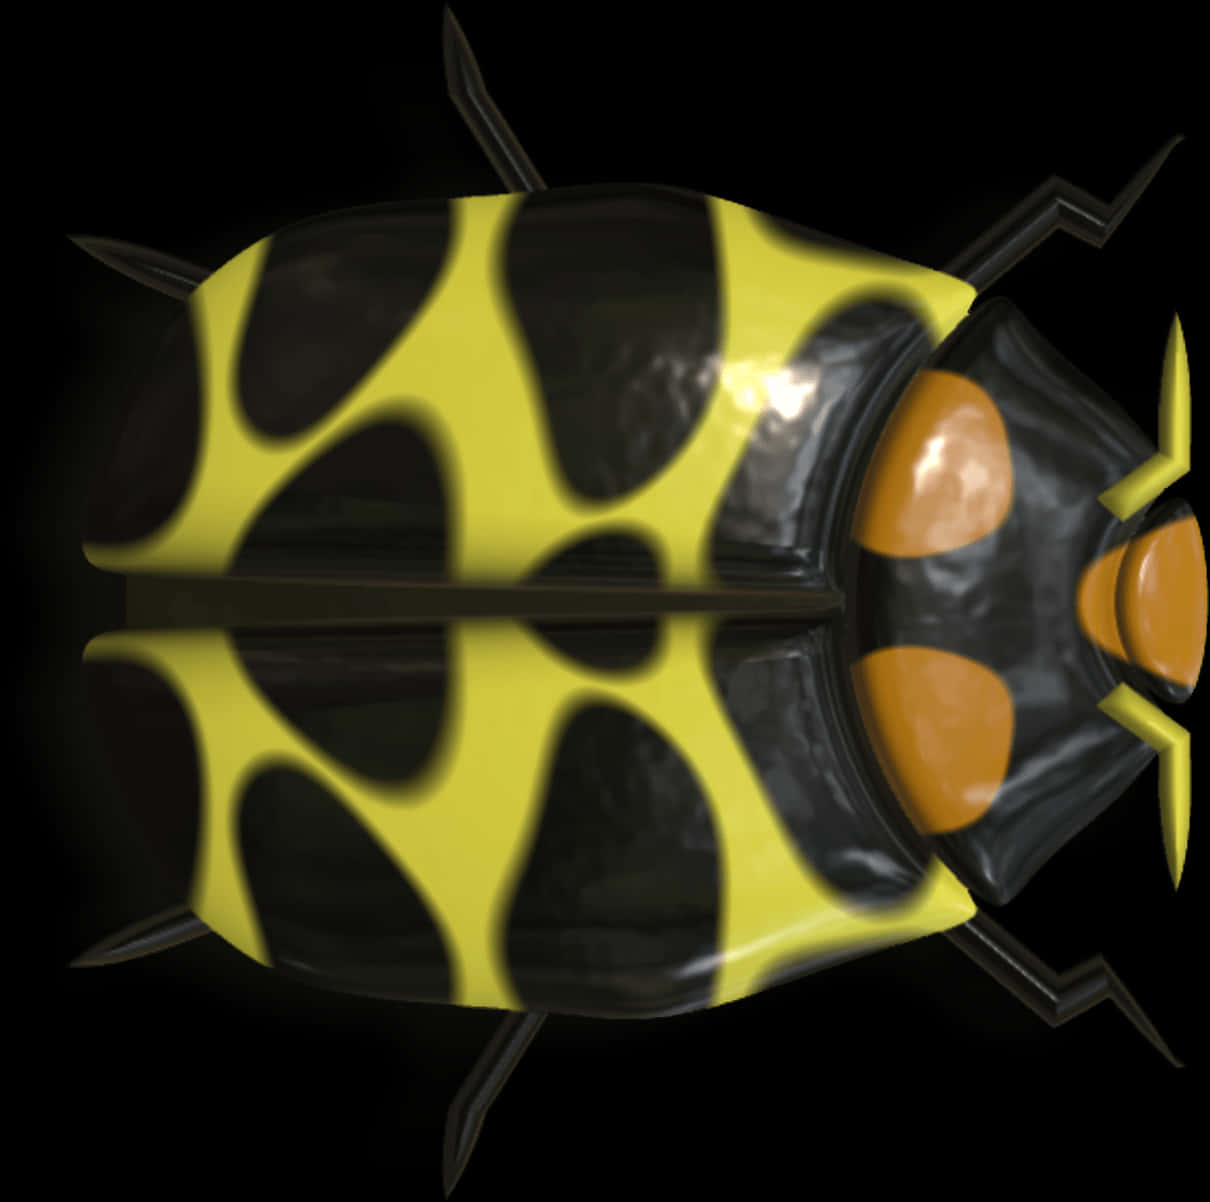 Abstract Ladybug Reflection